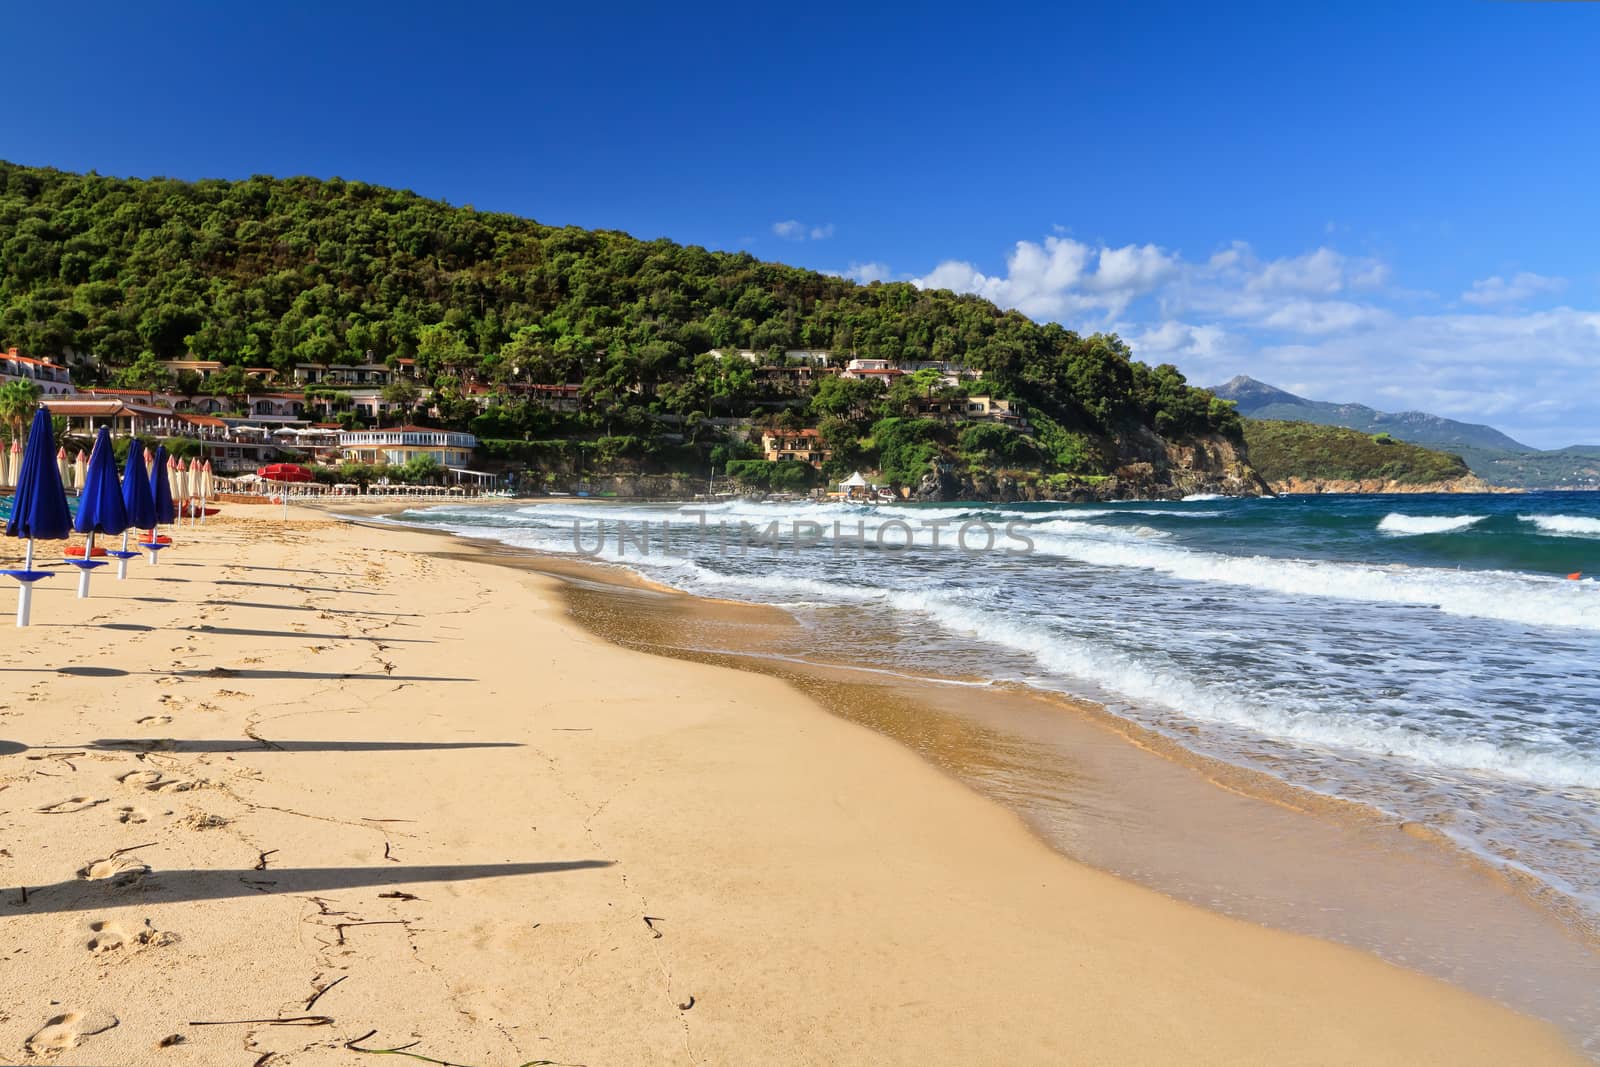 La Biodola, a famous sandy beach in the Isle of Elba, Italy